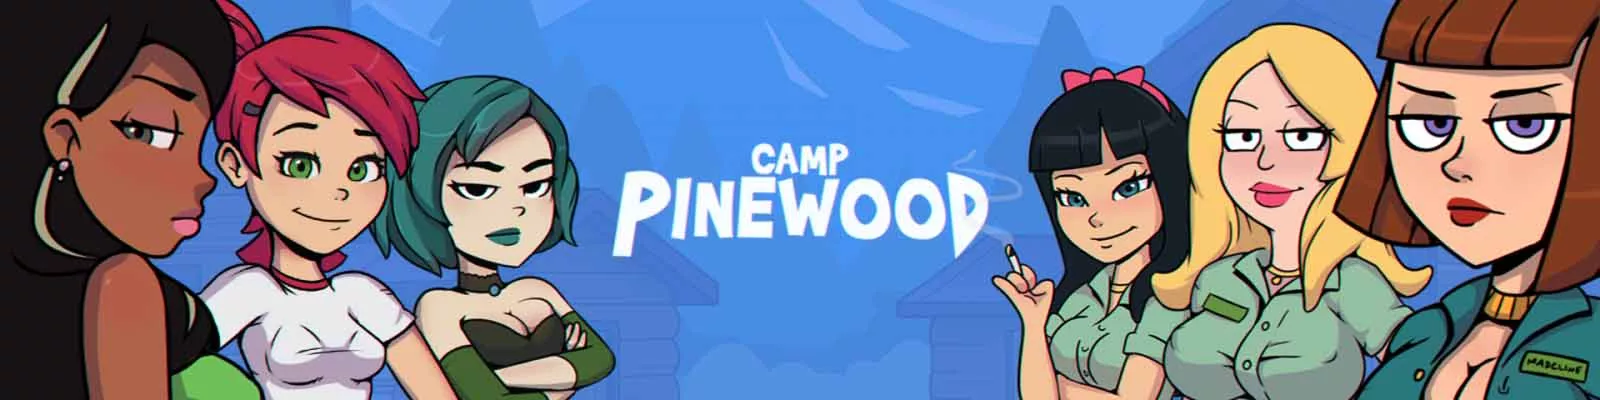 Camp Pinewood adult game